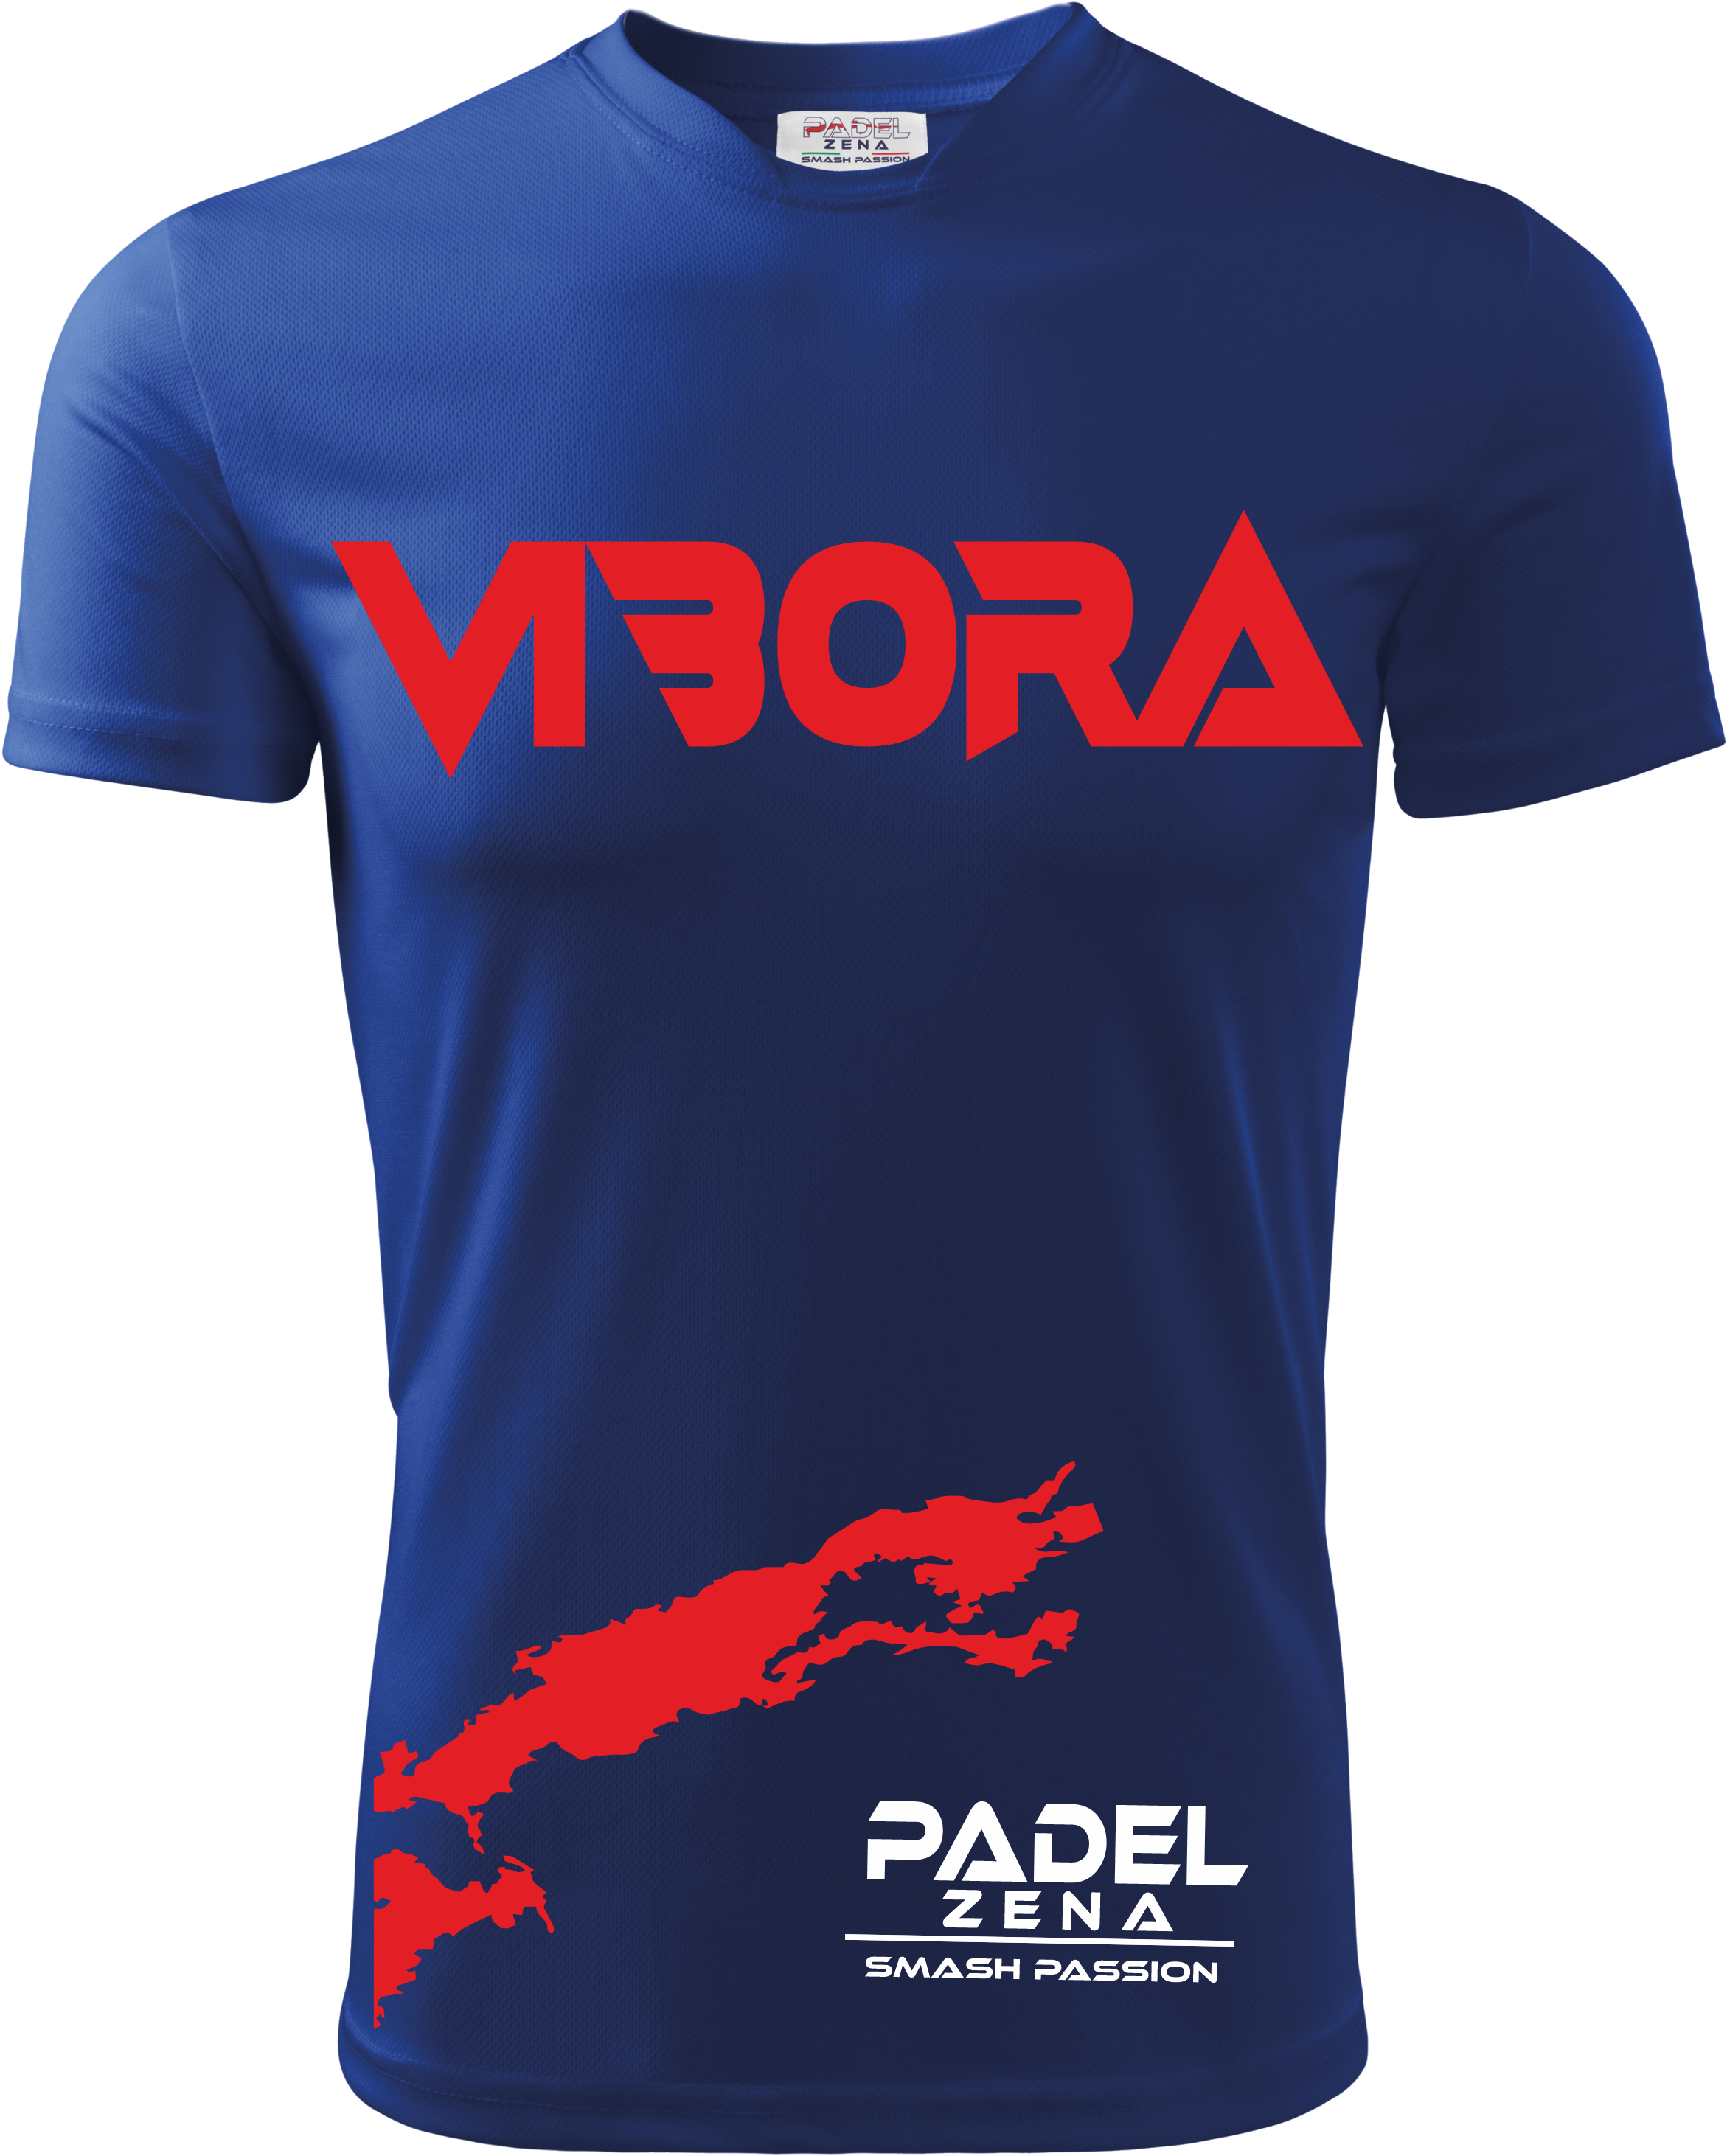 T-Shirt VIBORA RED Padel